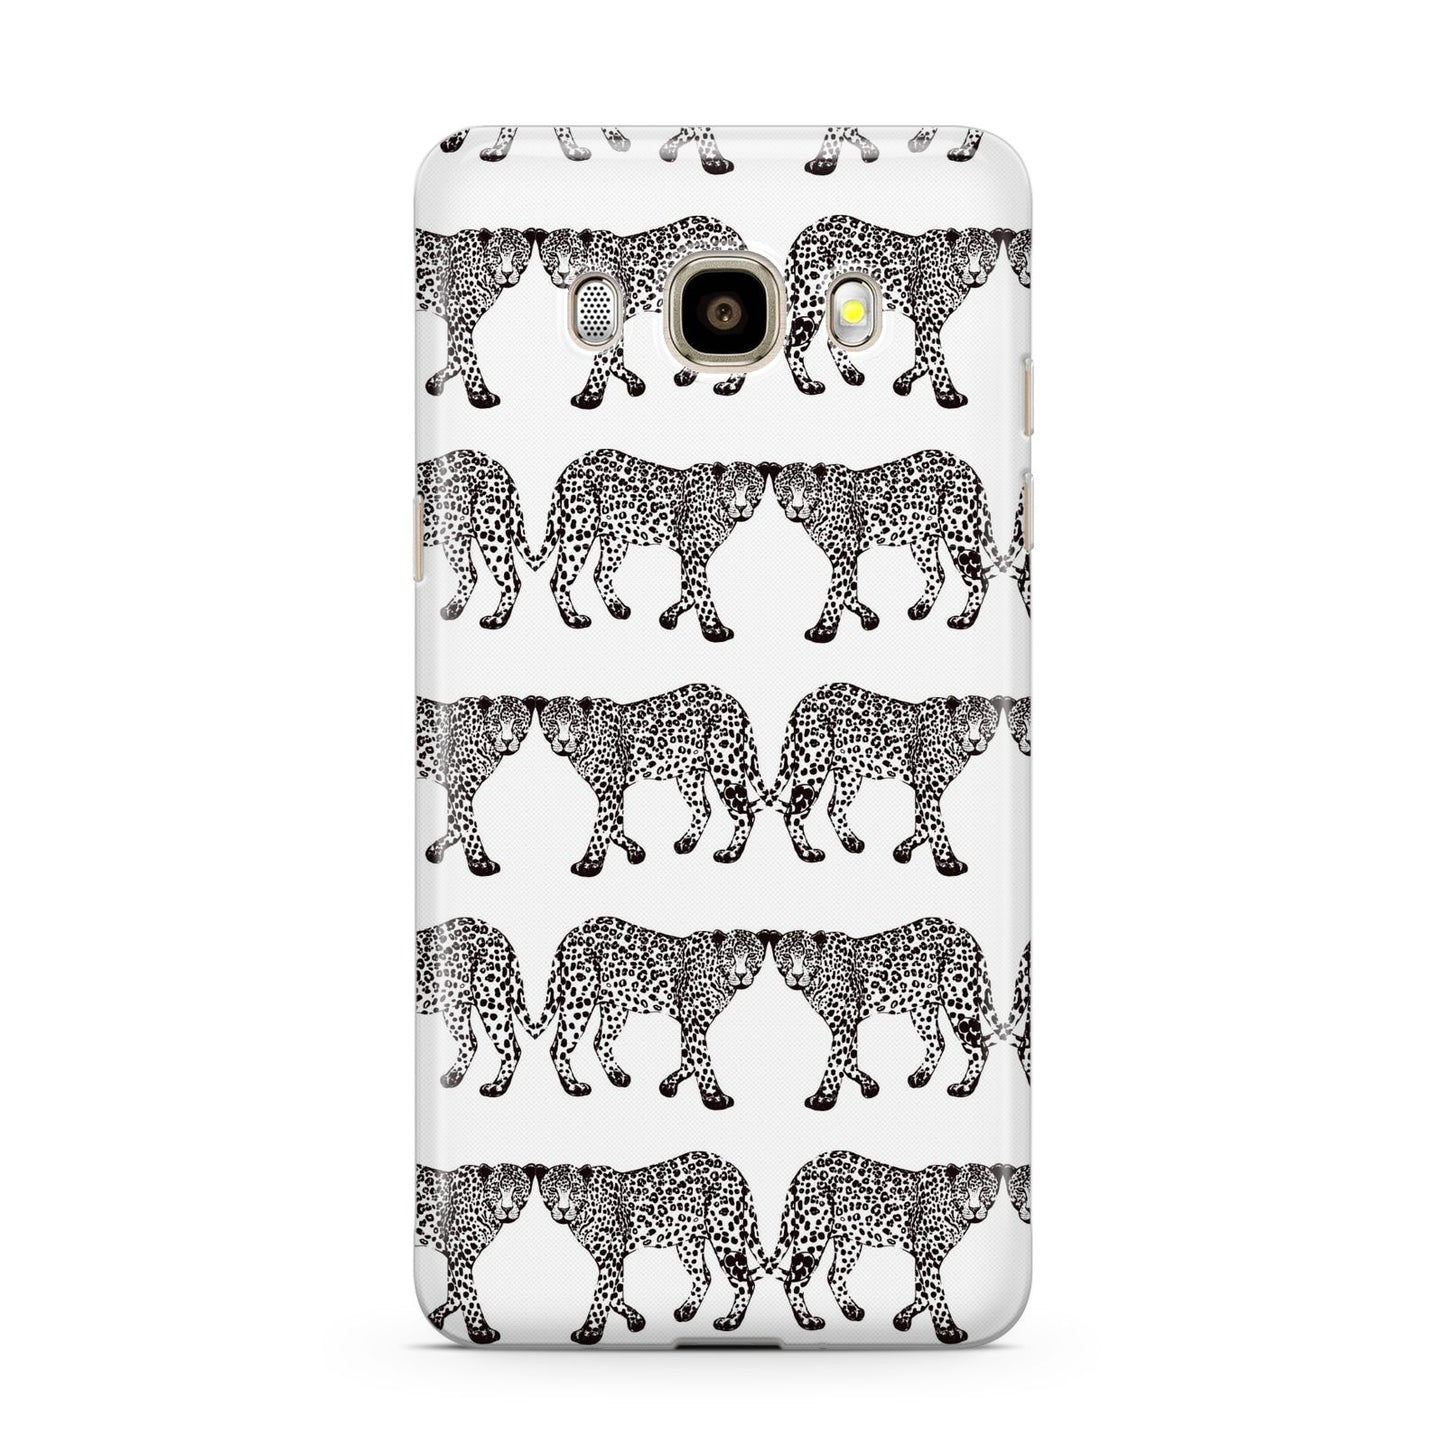 Monochrome Mirrored Leopard Print Samsung Galaxy J7 2016 Case on gold phone